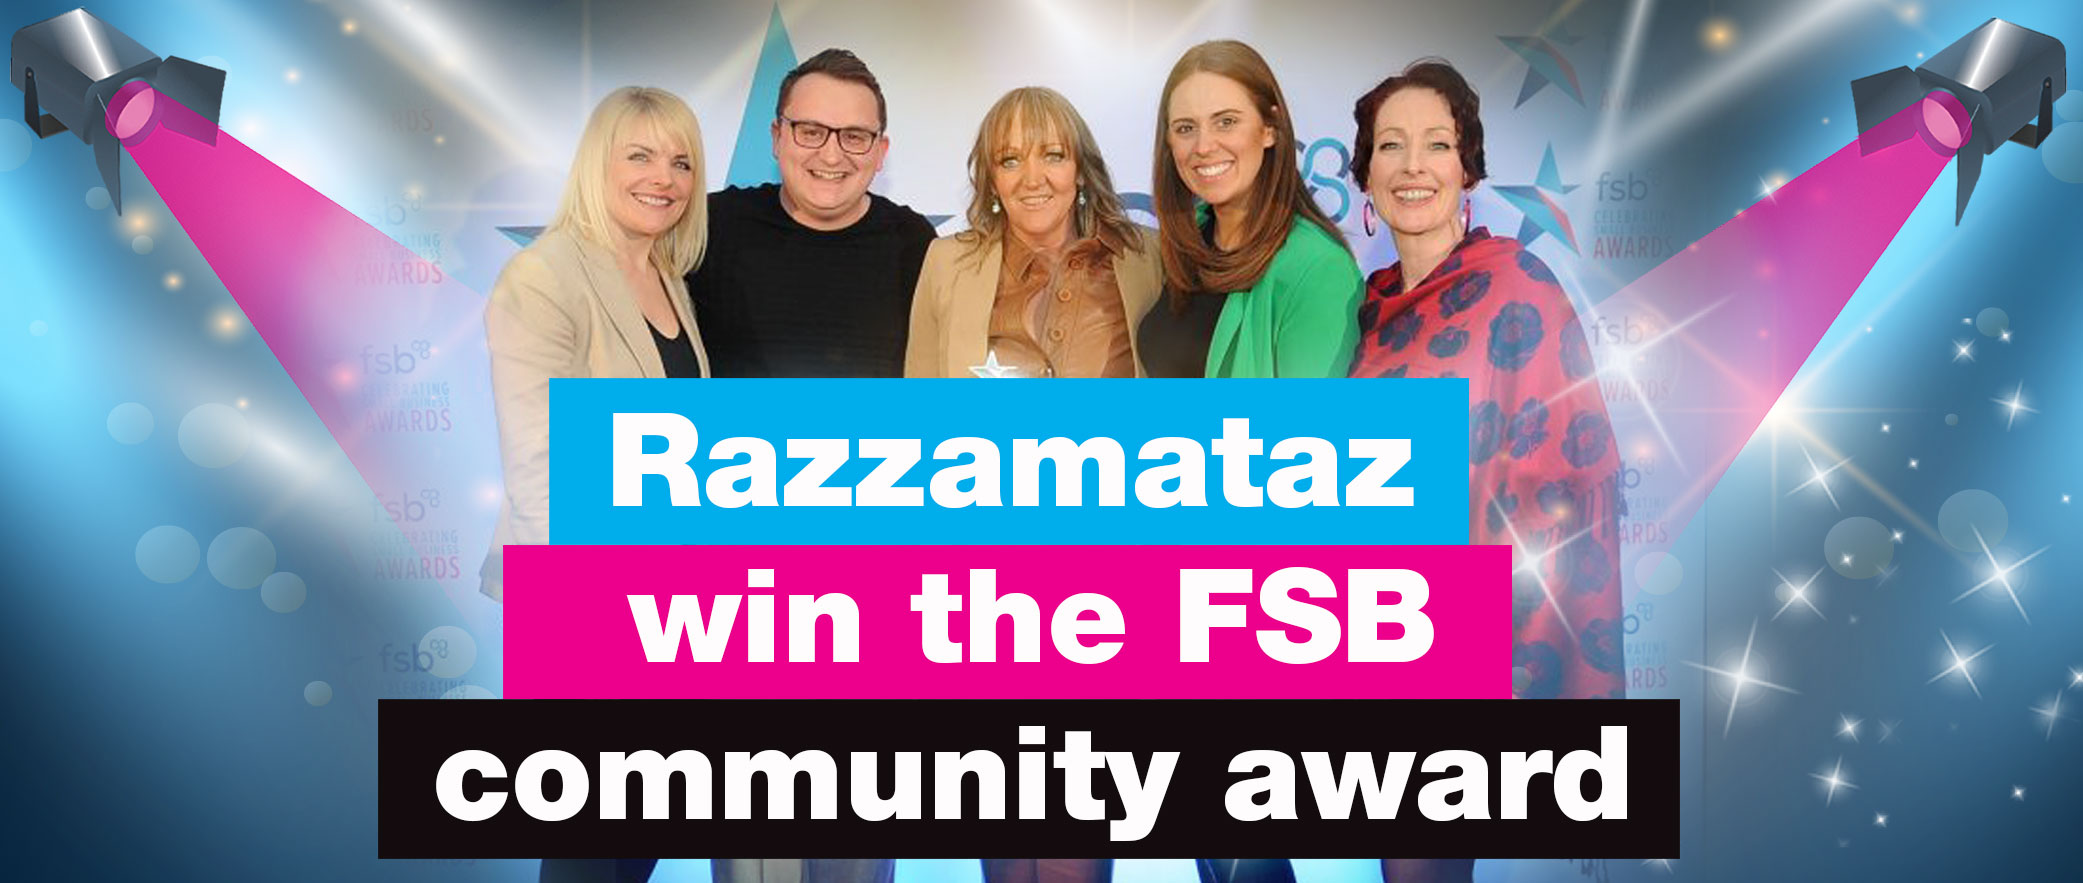 Community champions award win for Razzamataz